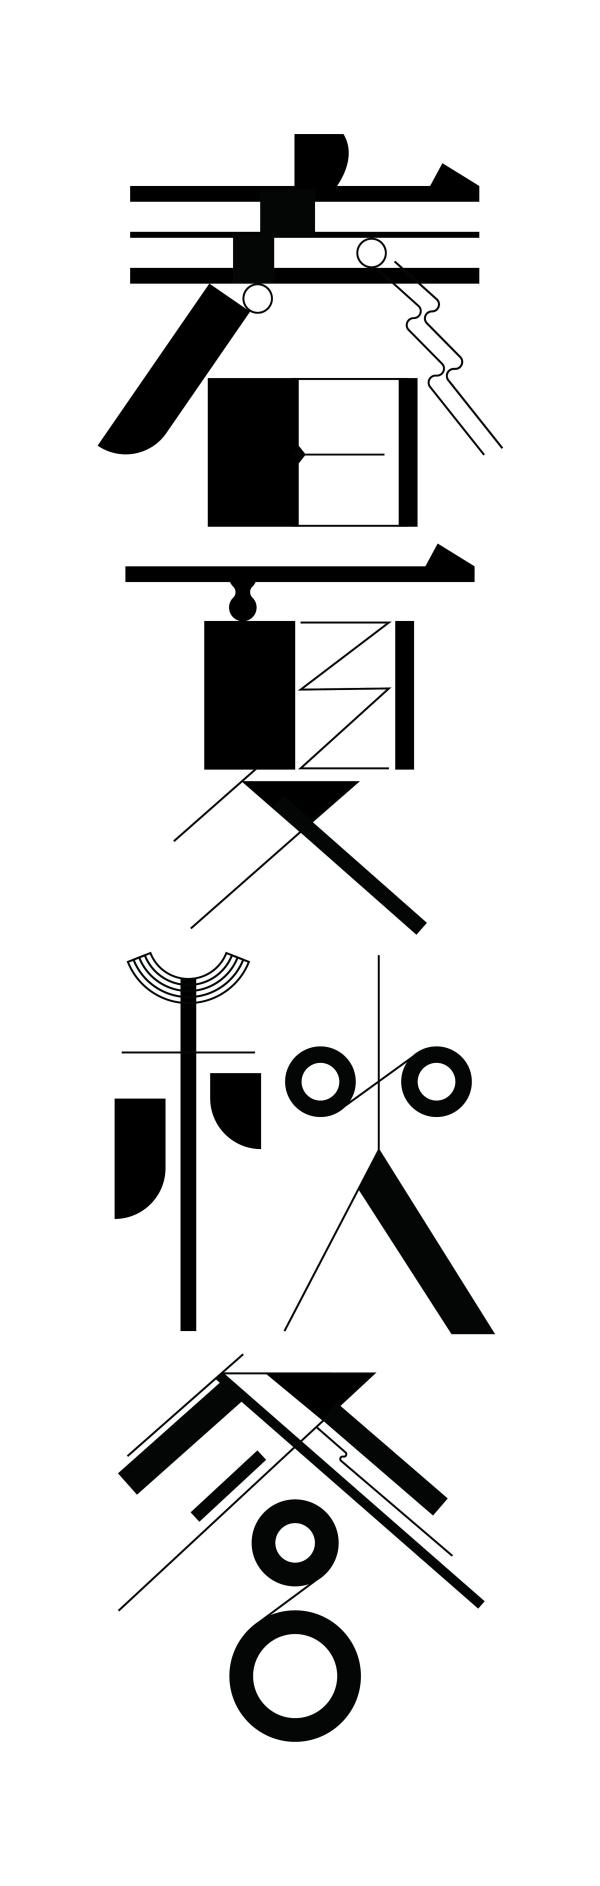 shiki - gradations artwork